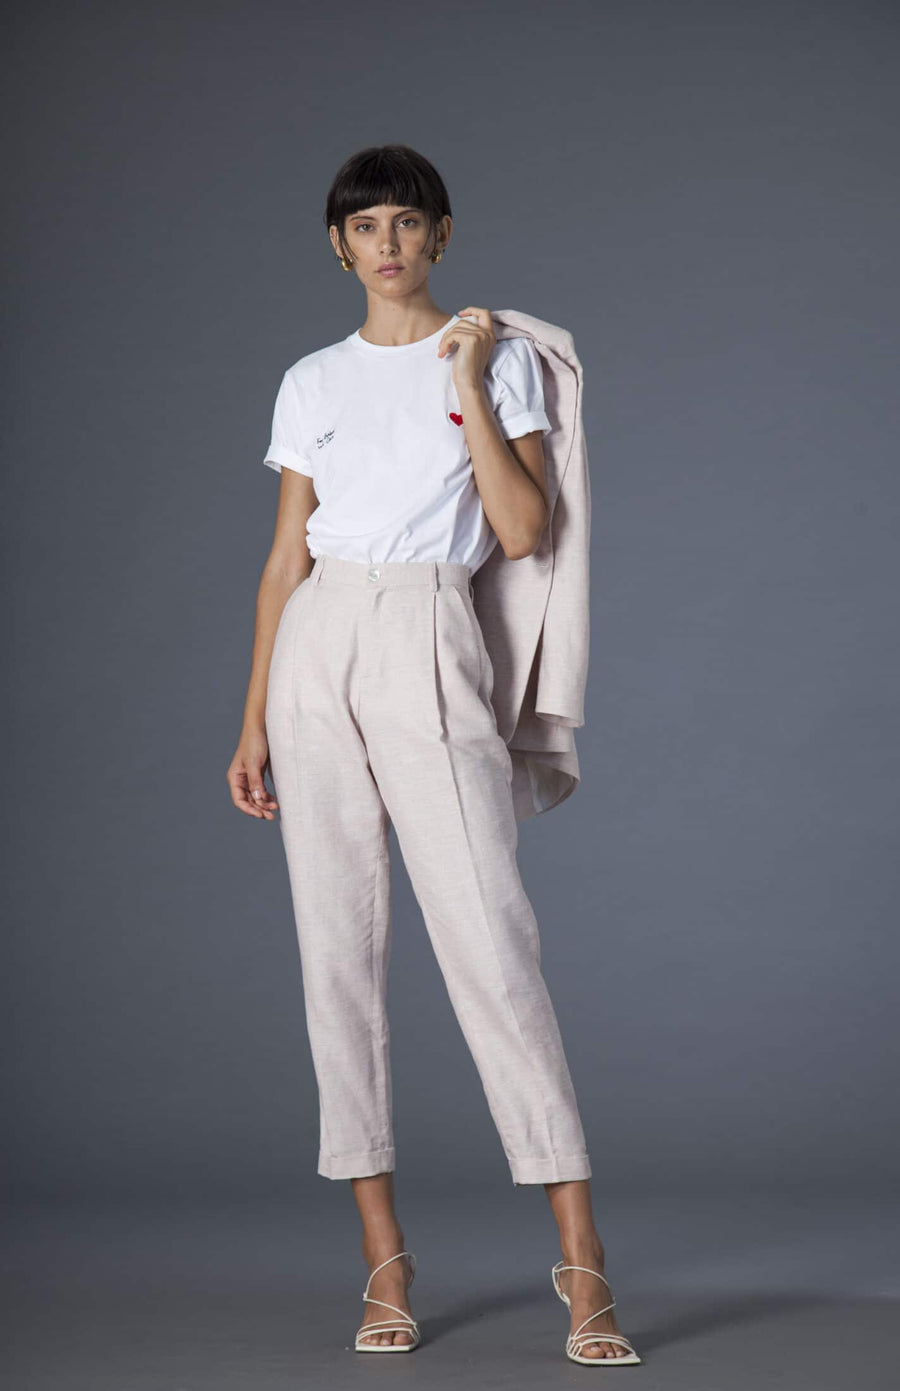 Souldaze Collection Hosen & Shorts Jane Hosen hellrosa nachhaltige Mode ethische Mode